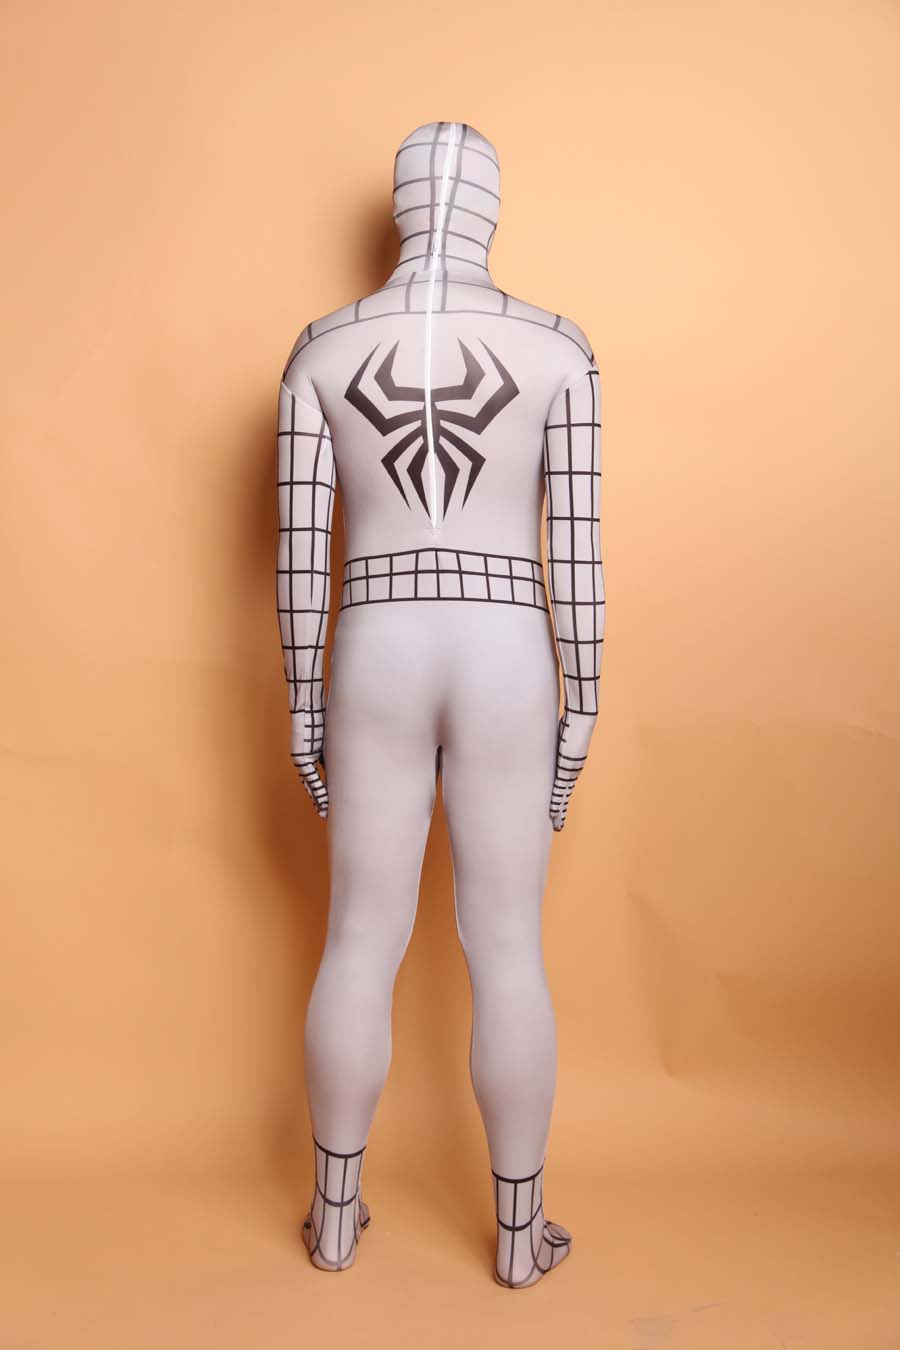 New Fashion Flesh Spider Man Halloween Costume